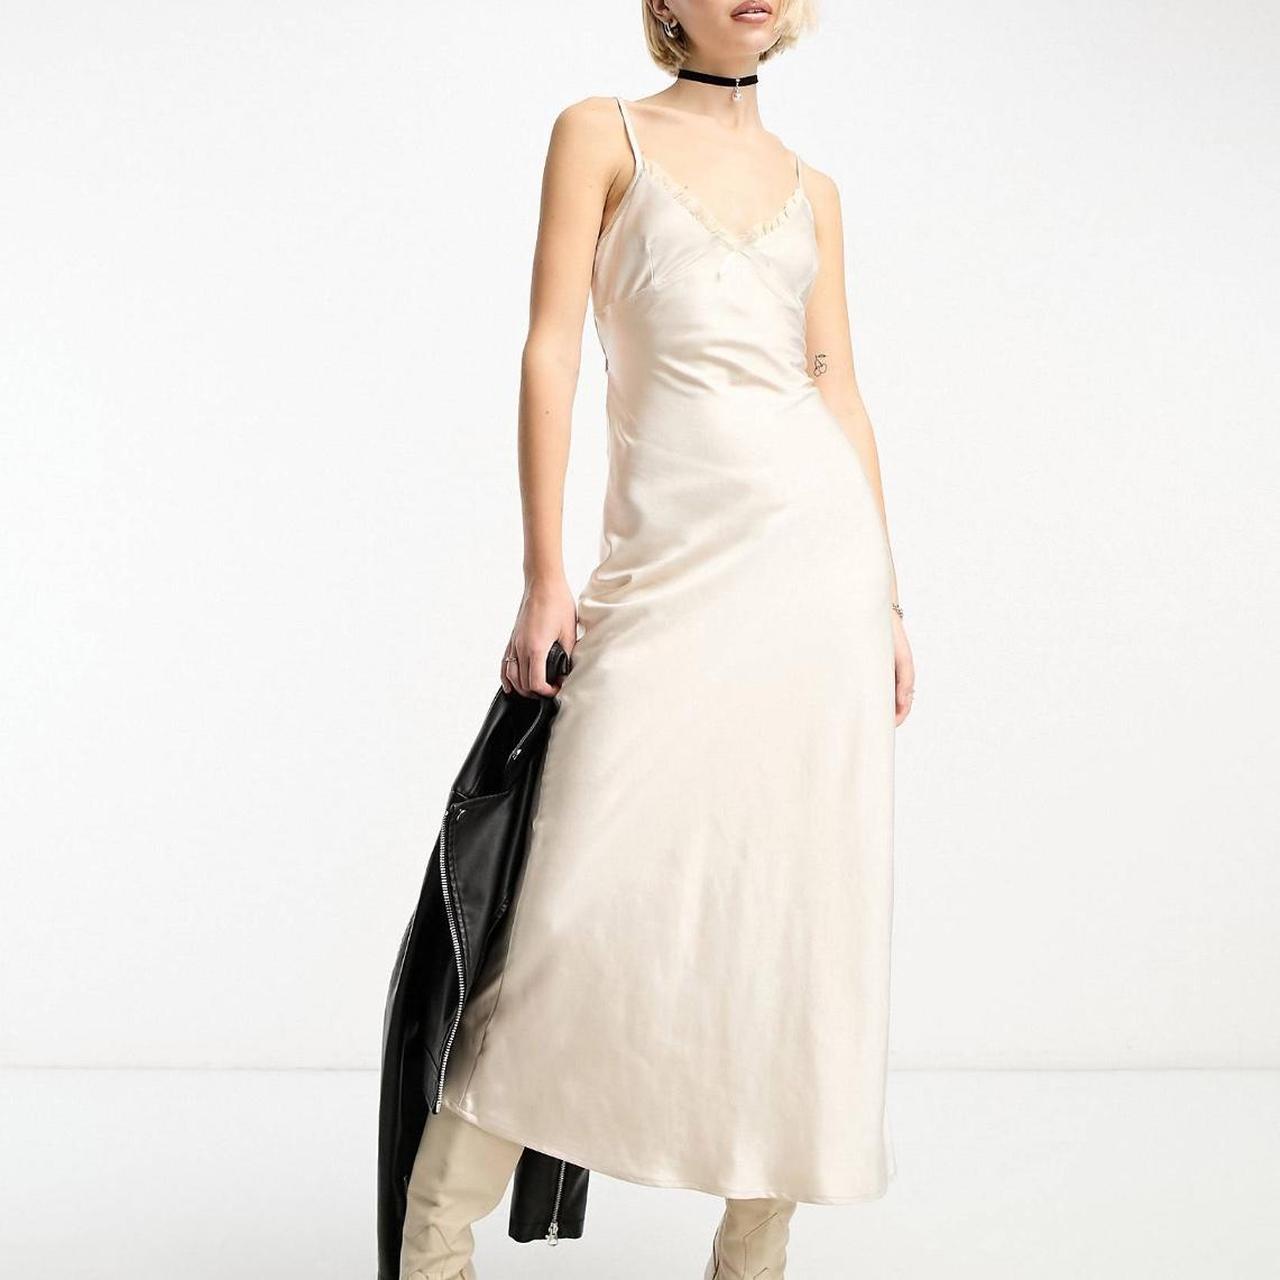 Silk slip dress maxi In ivory / white Lace detail... - Depop